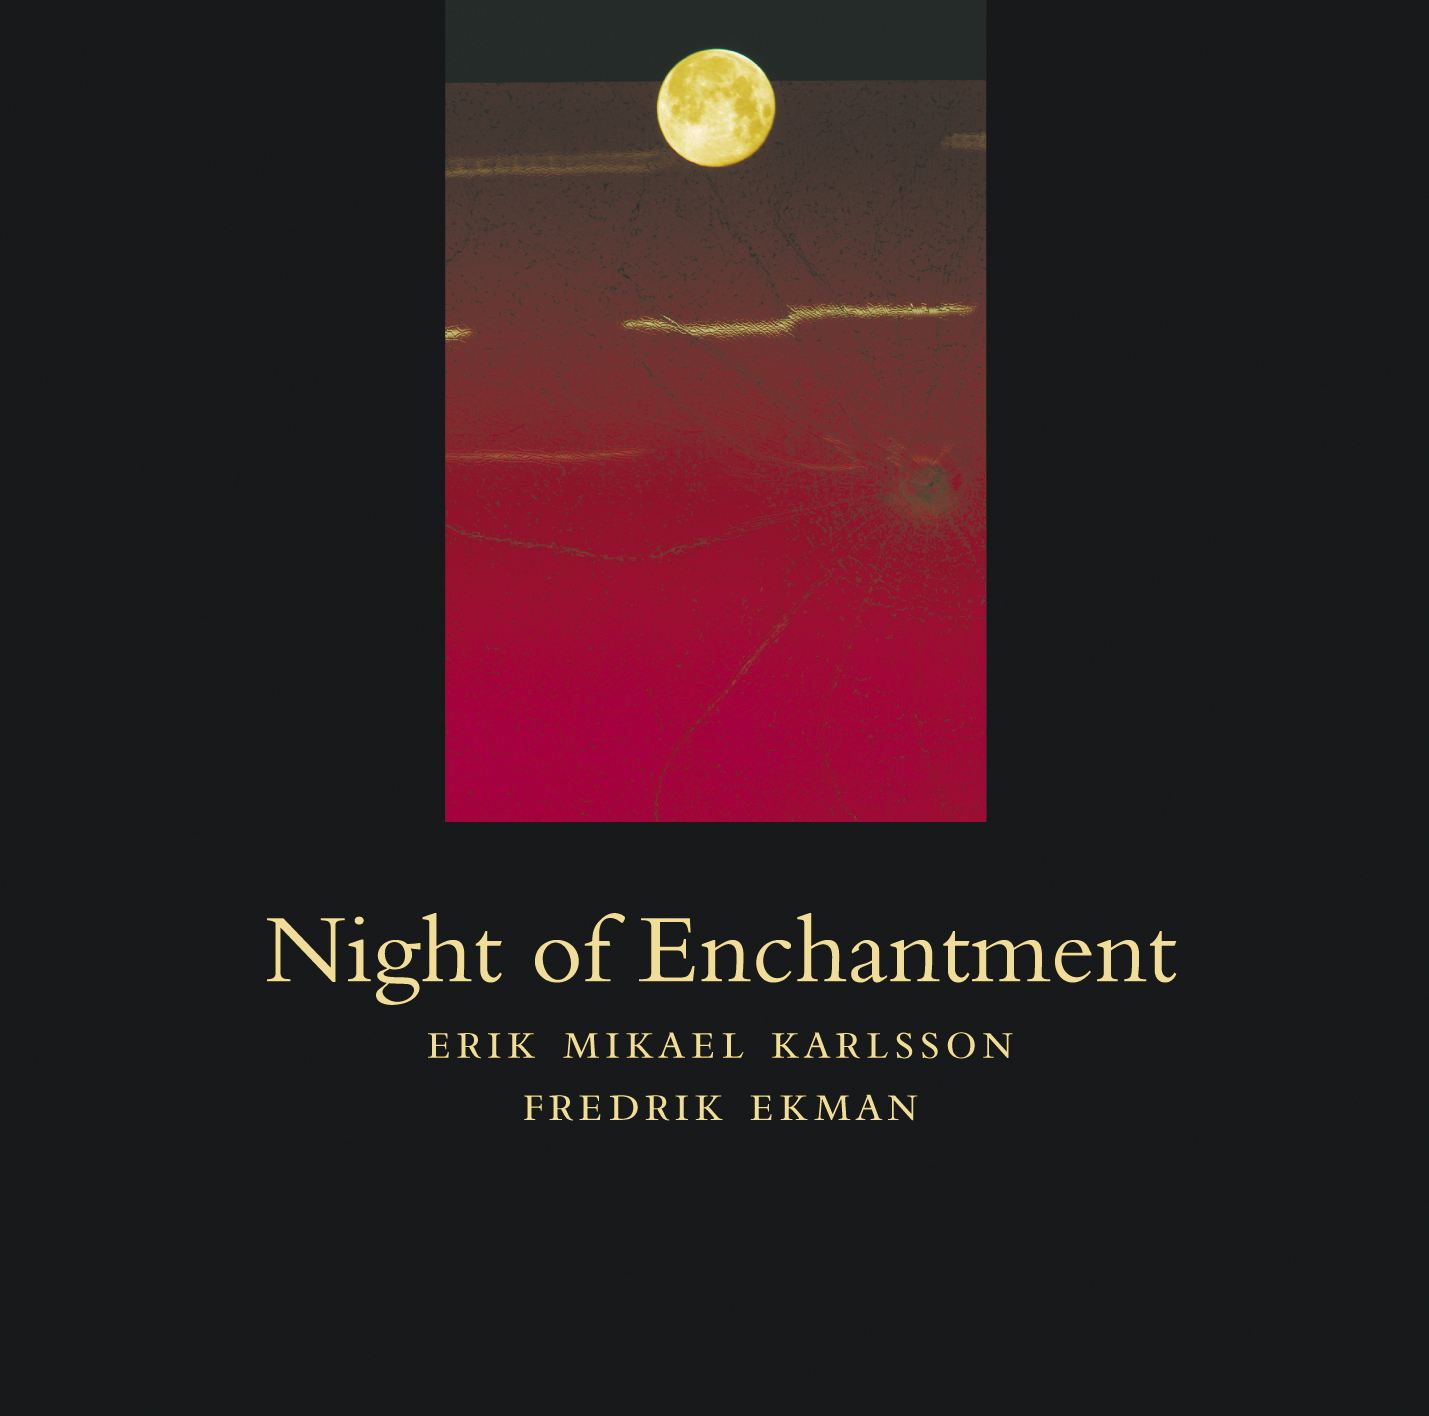 Night of enchantment